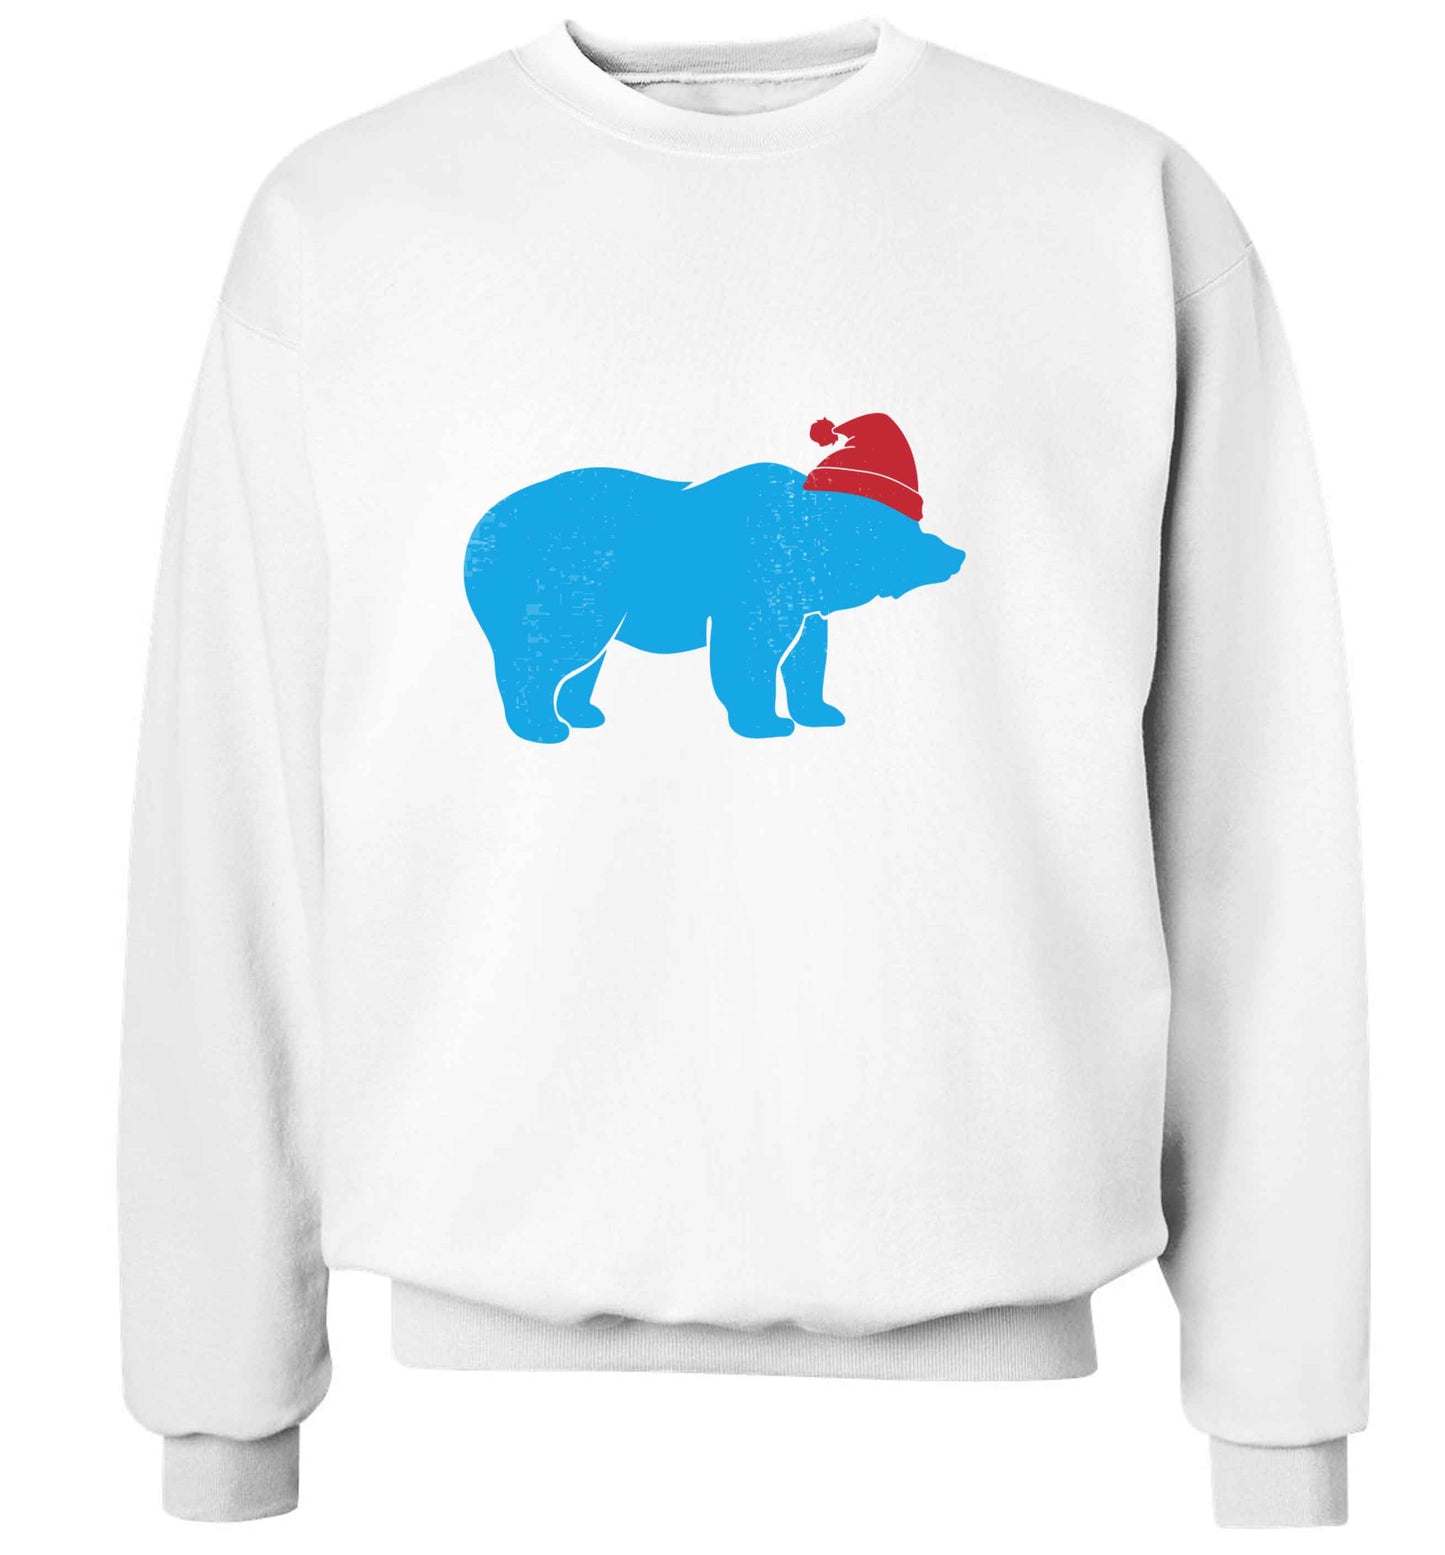 Blue bear Santa adult's unisex white sweater 2XL